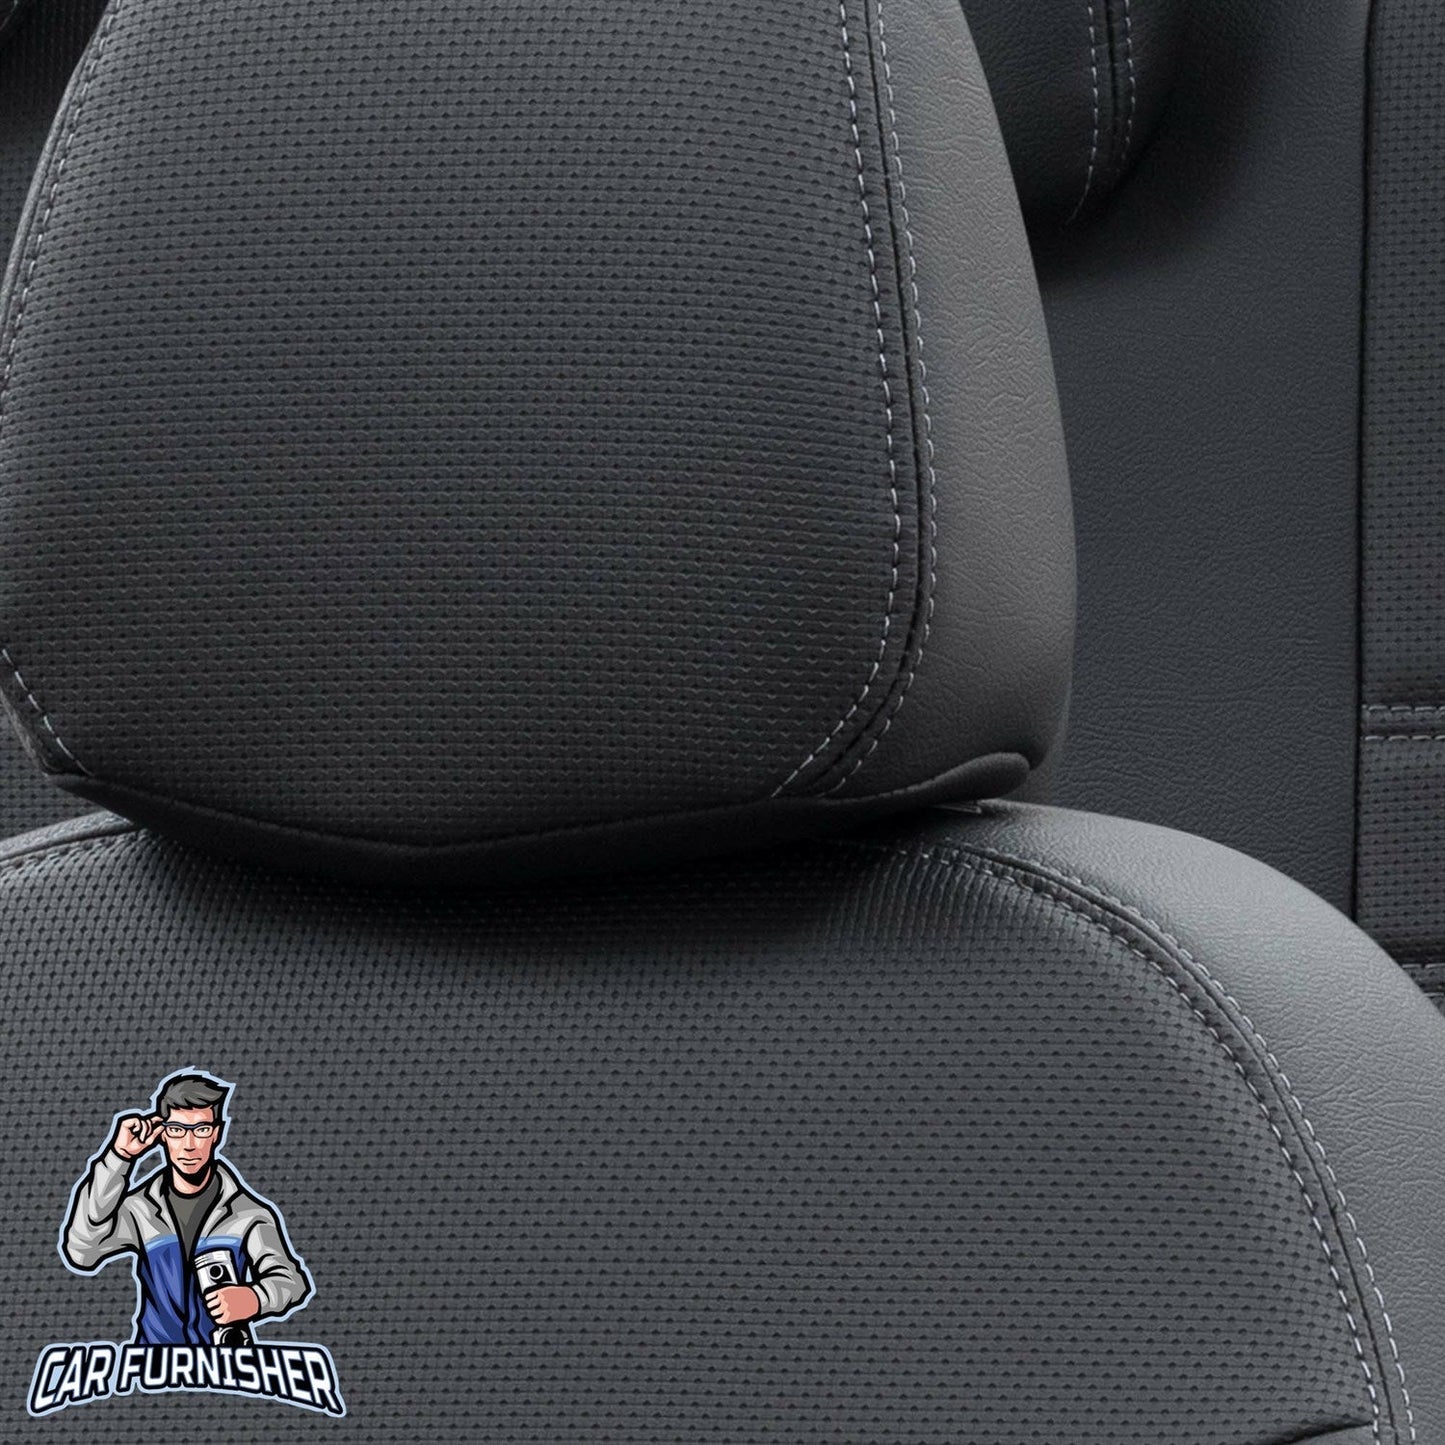 Renault Kangoo Seat Covers New York Leather Design Black Leather